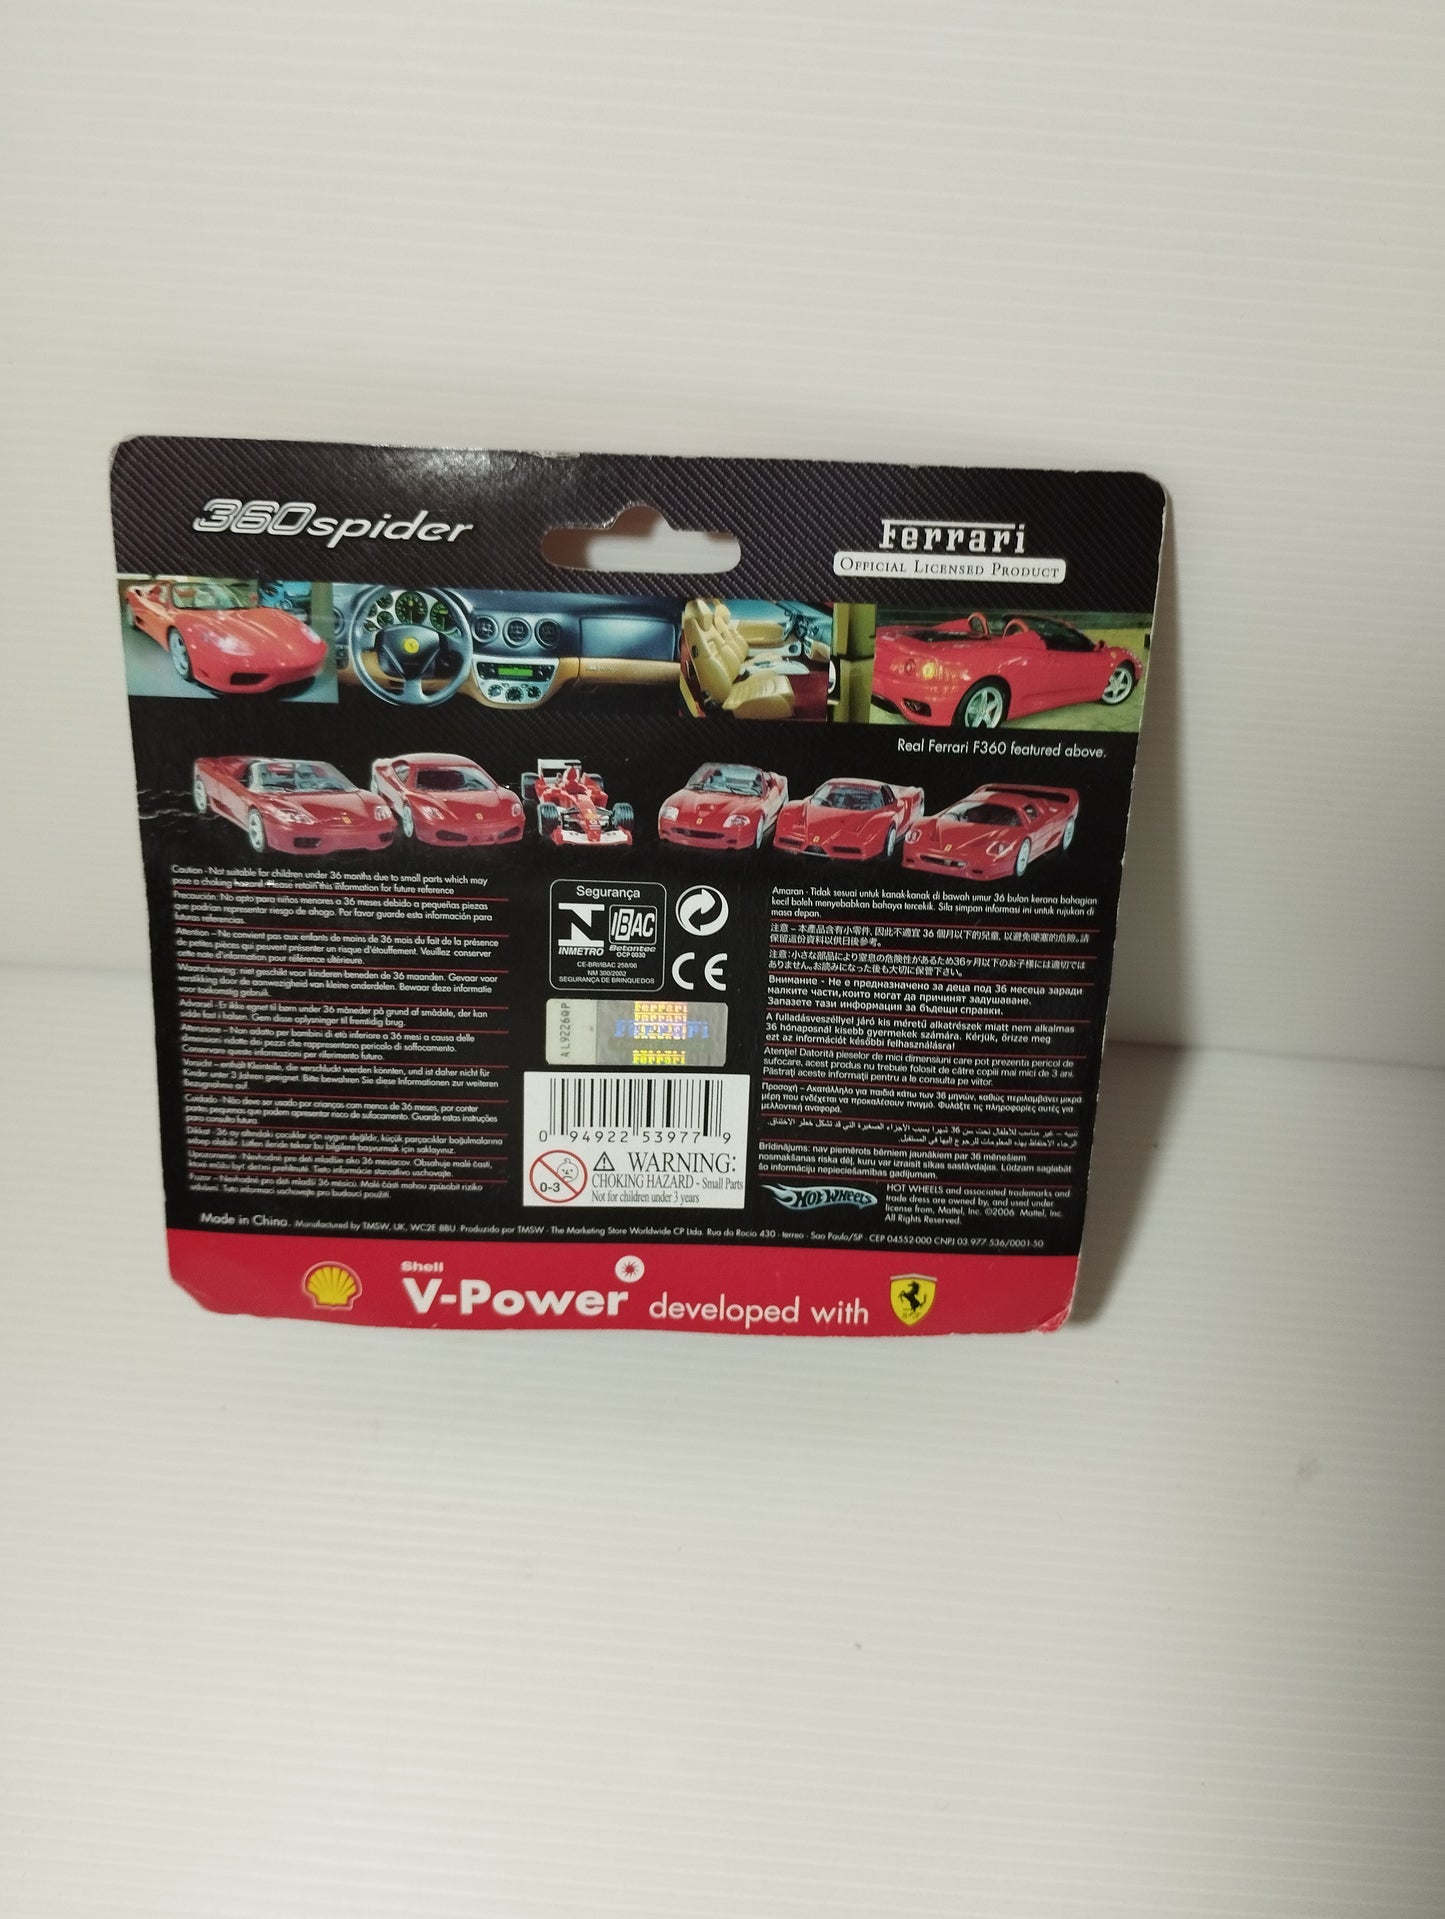 Ferrari 360 Spider Shell V-Power Hot Whells
Scala 1:38